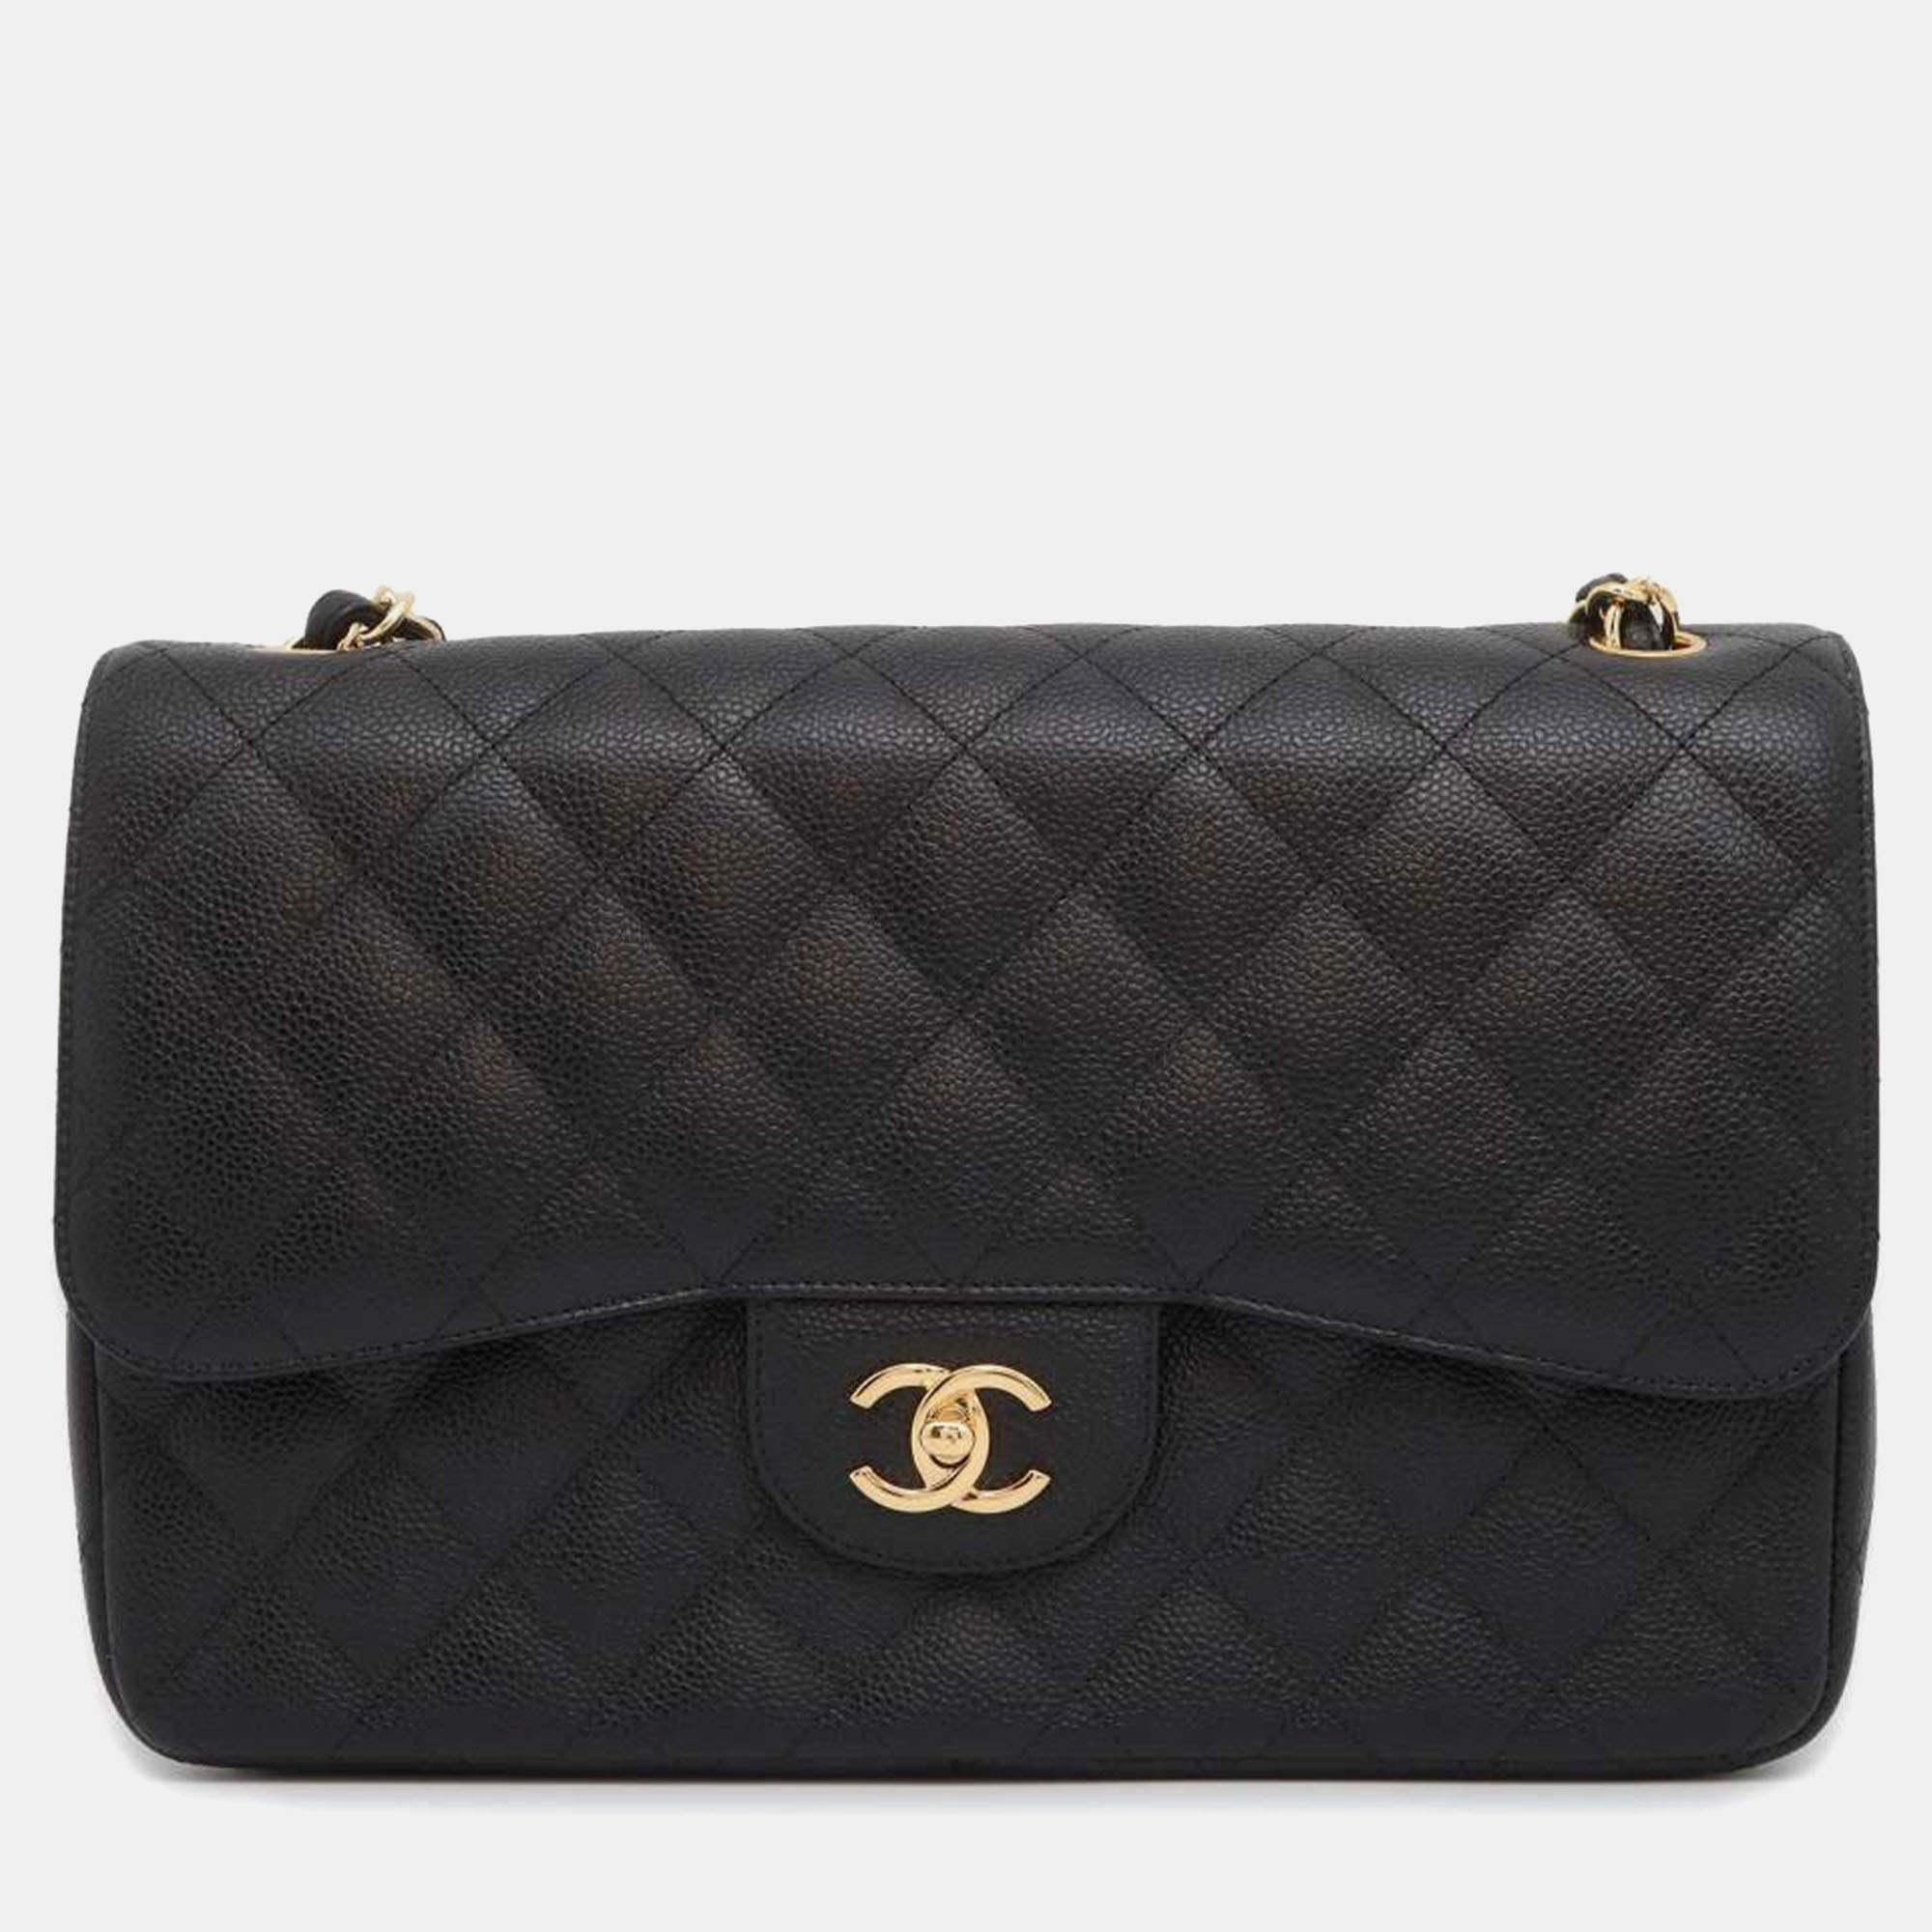 Chanel black caviar leather jumbo classic double flap bag